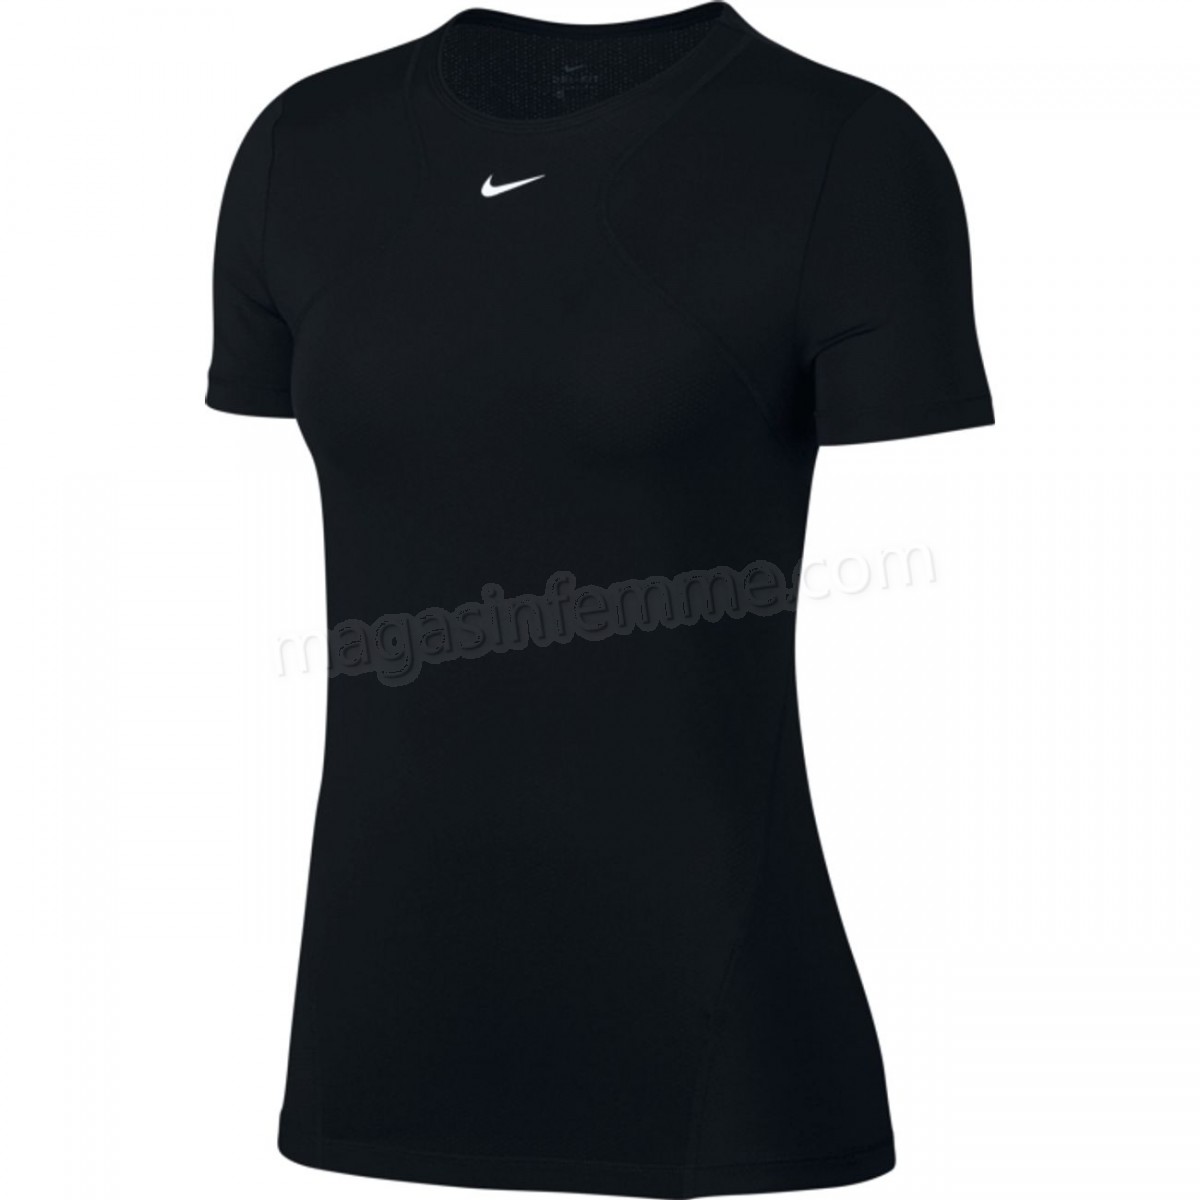 Nike-TOP Fitness femme NIKE NP ALL OVER MESH en solde - -0